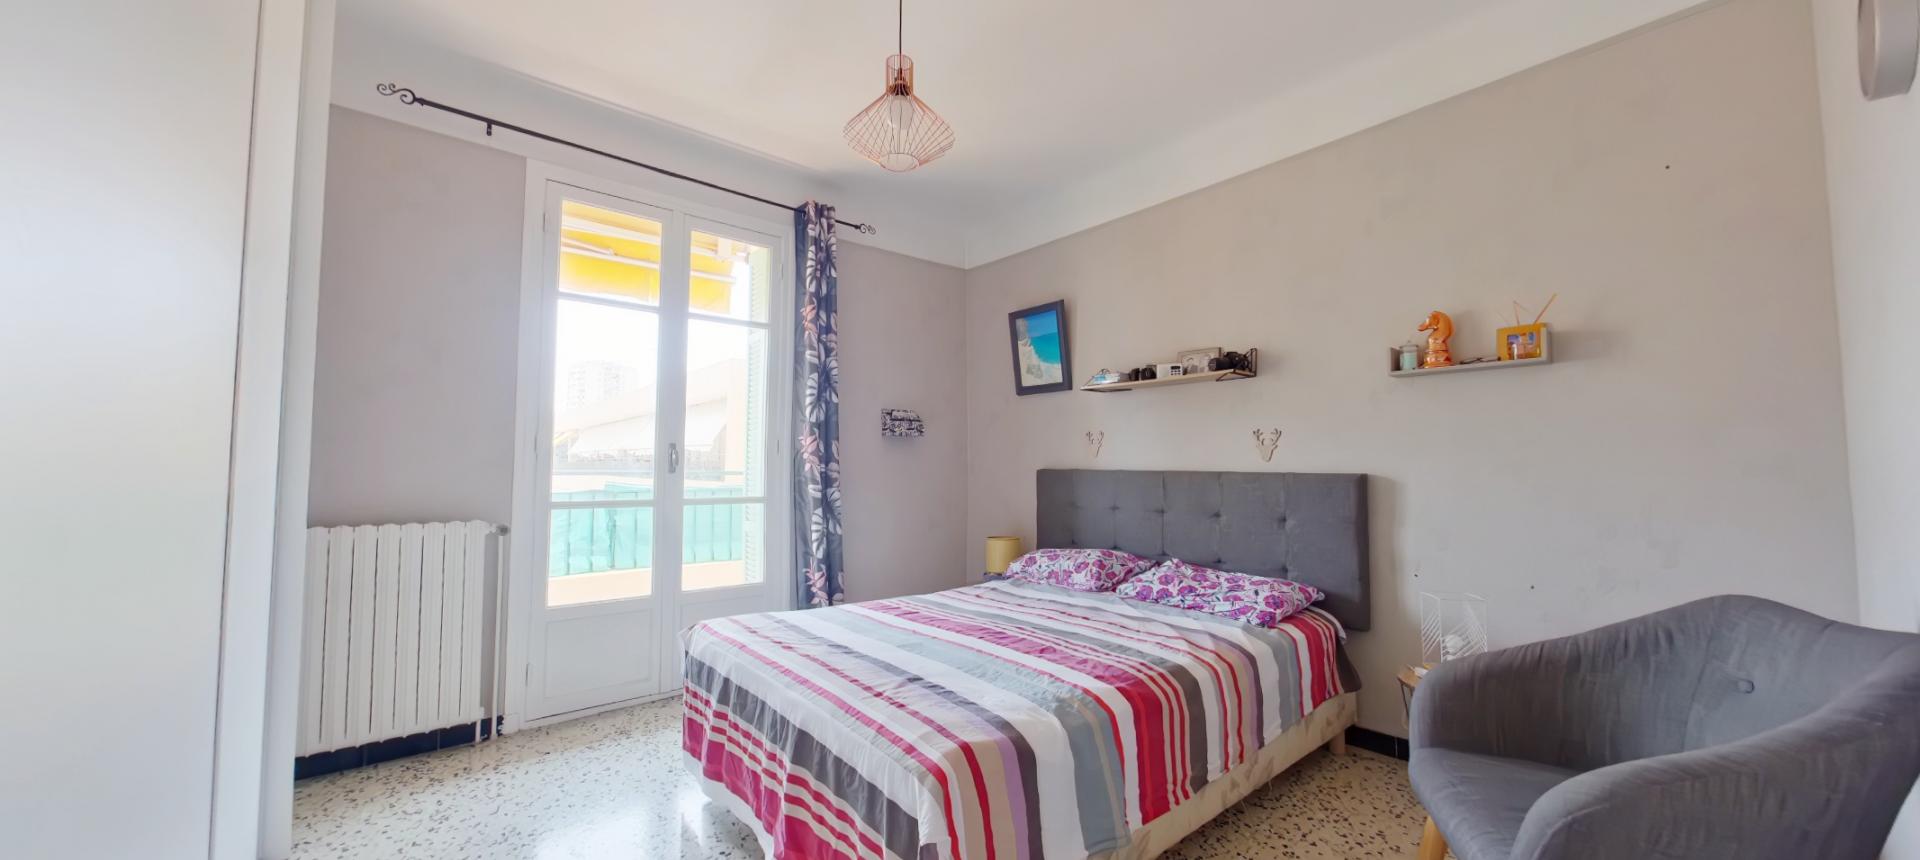 Appartement F4 à vendre à Ajaccio - Résidence Binda